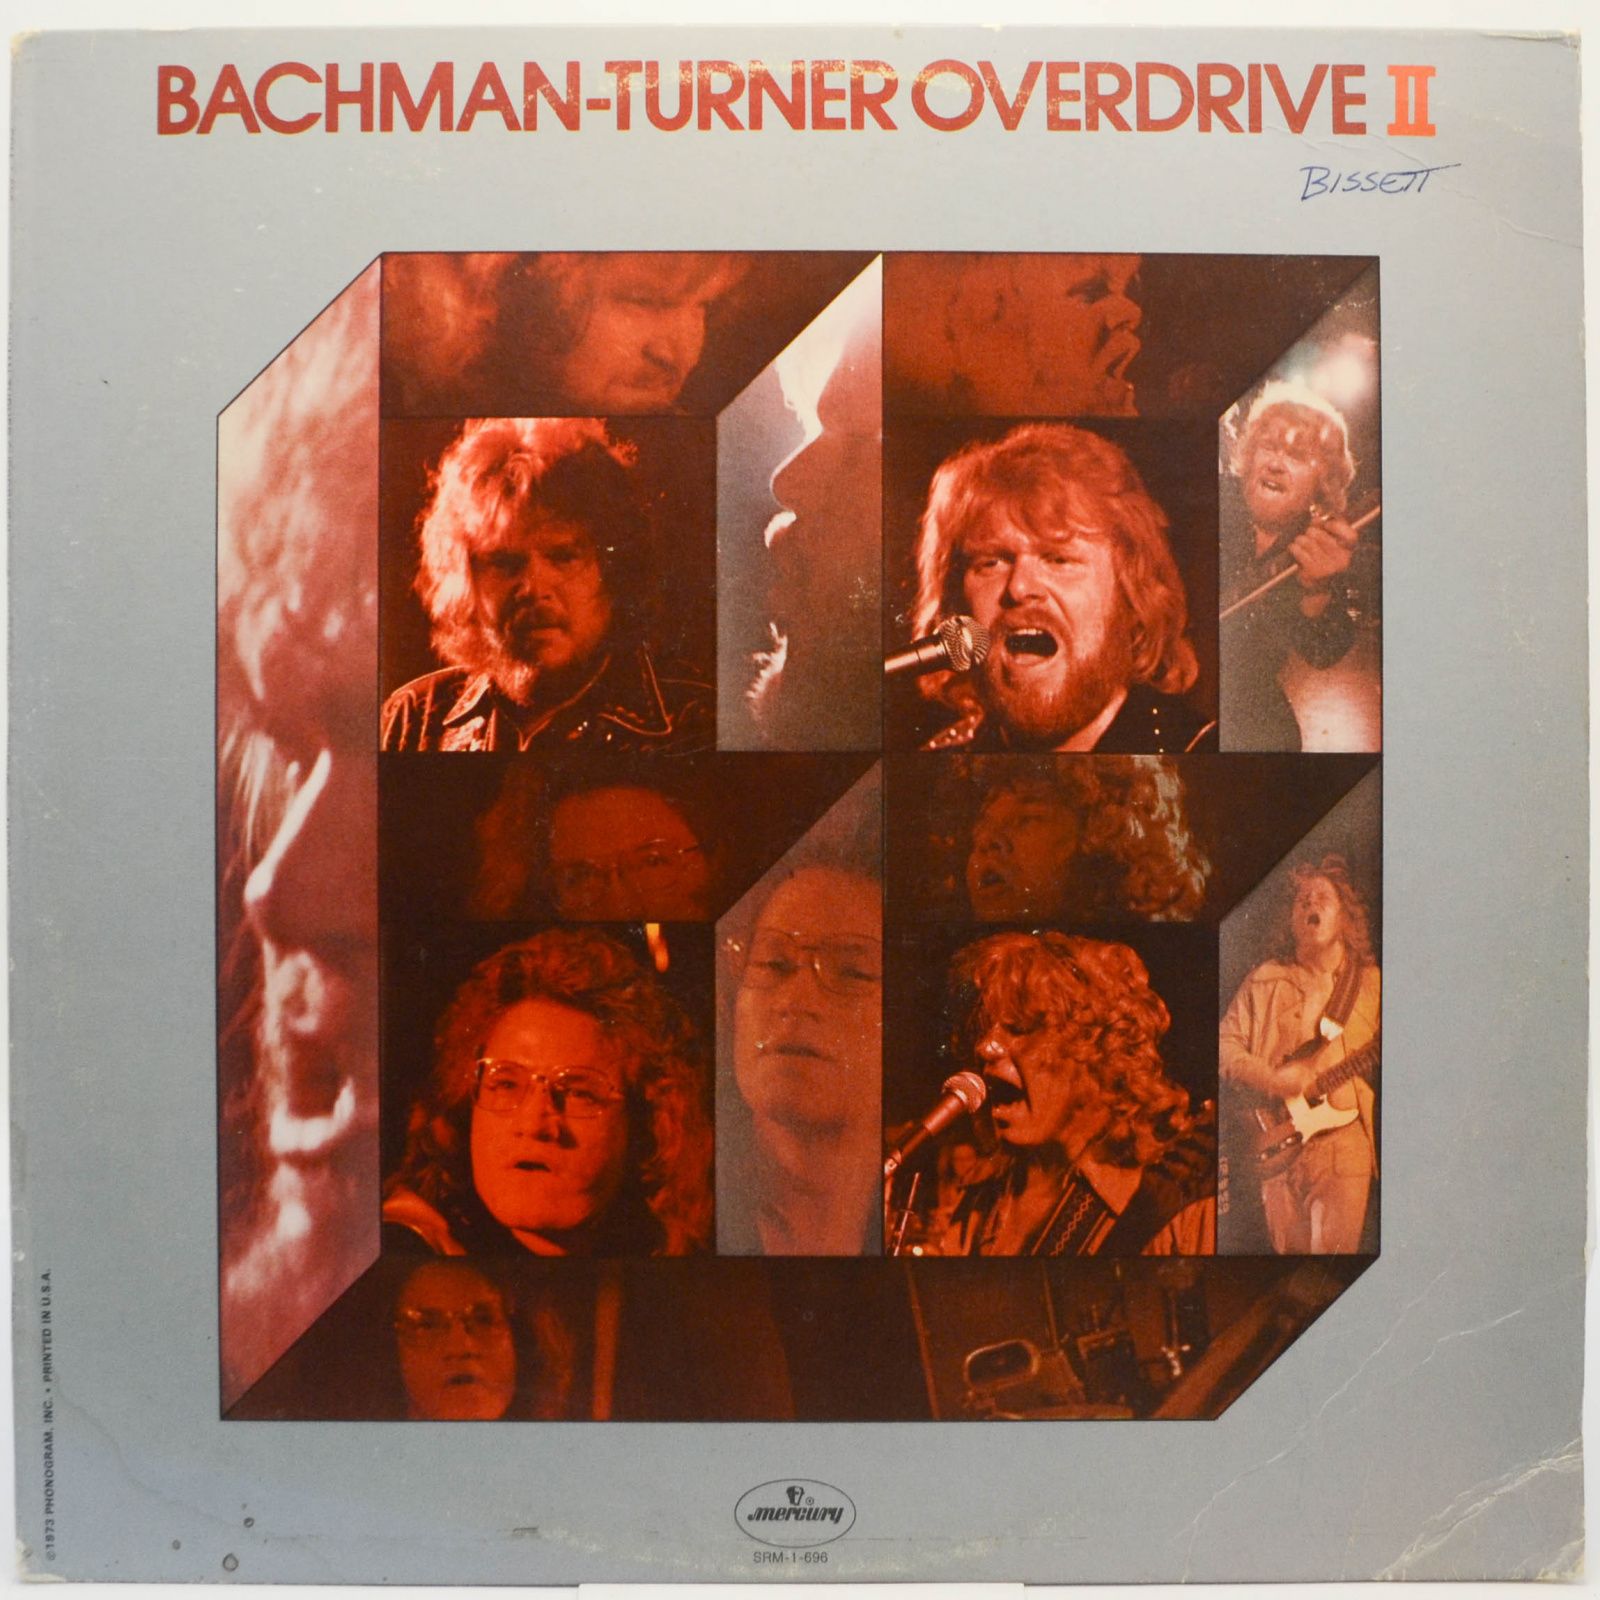 Bachman-Turner Overdrive II (USA), 1973